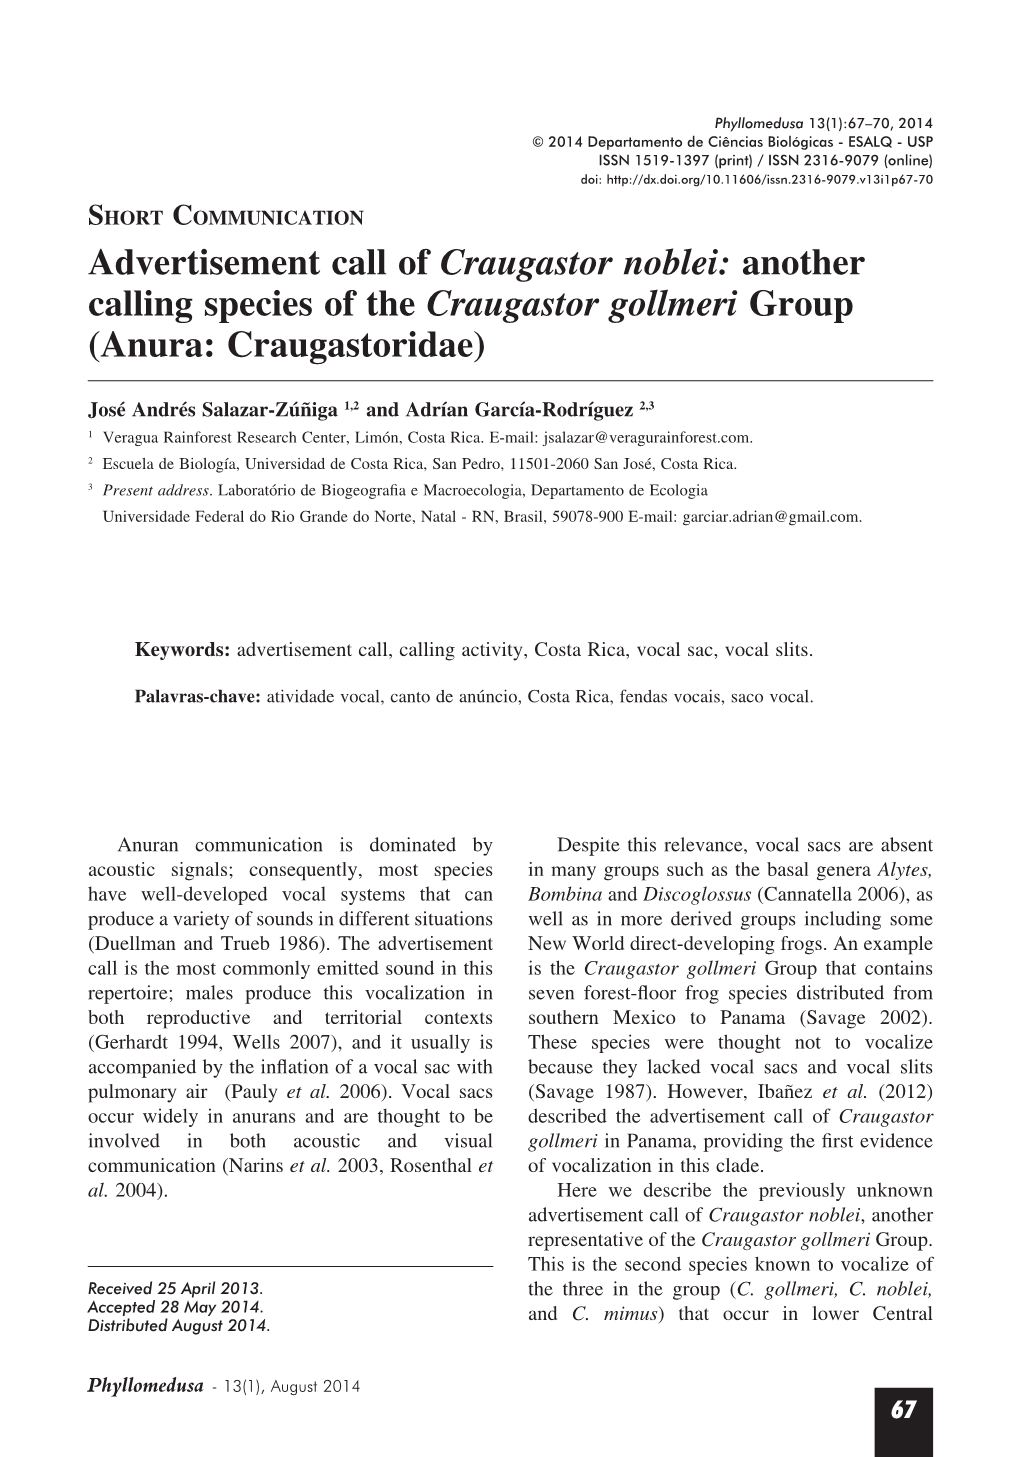 Advertisement Call of Craugastor Noblei: Another Calling Species of the Craugastor Gollmeri Group (Anura: Craugastoridae)